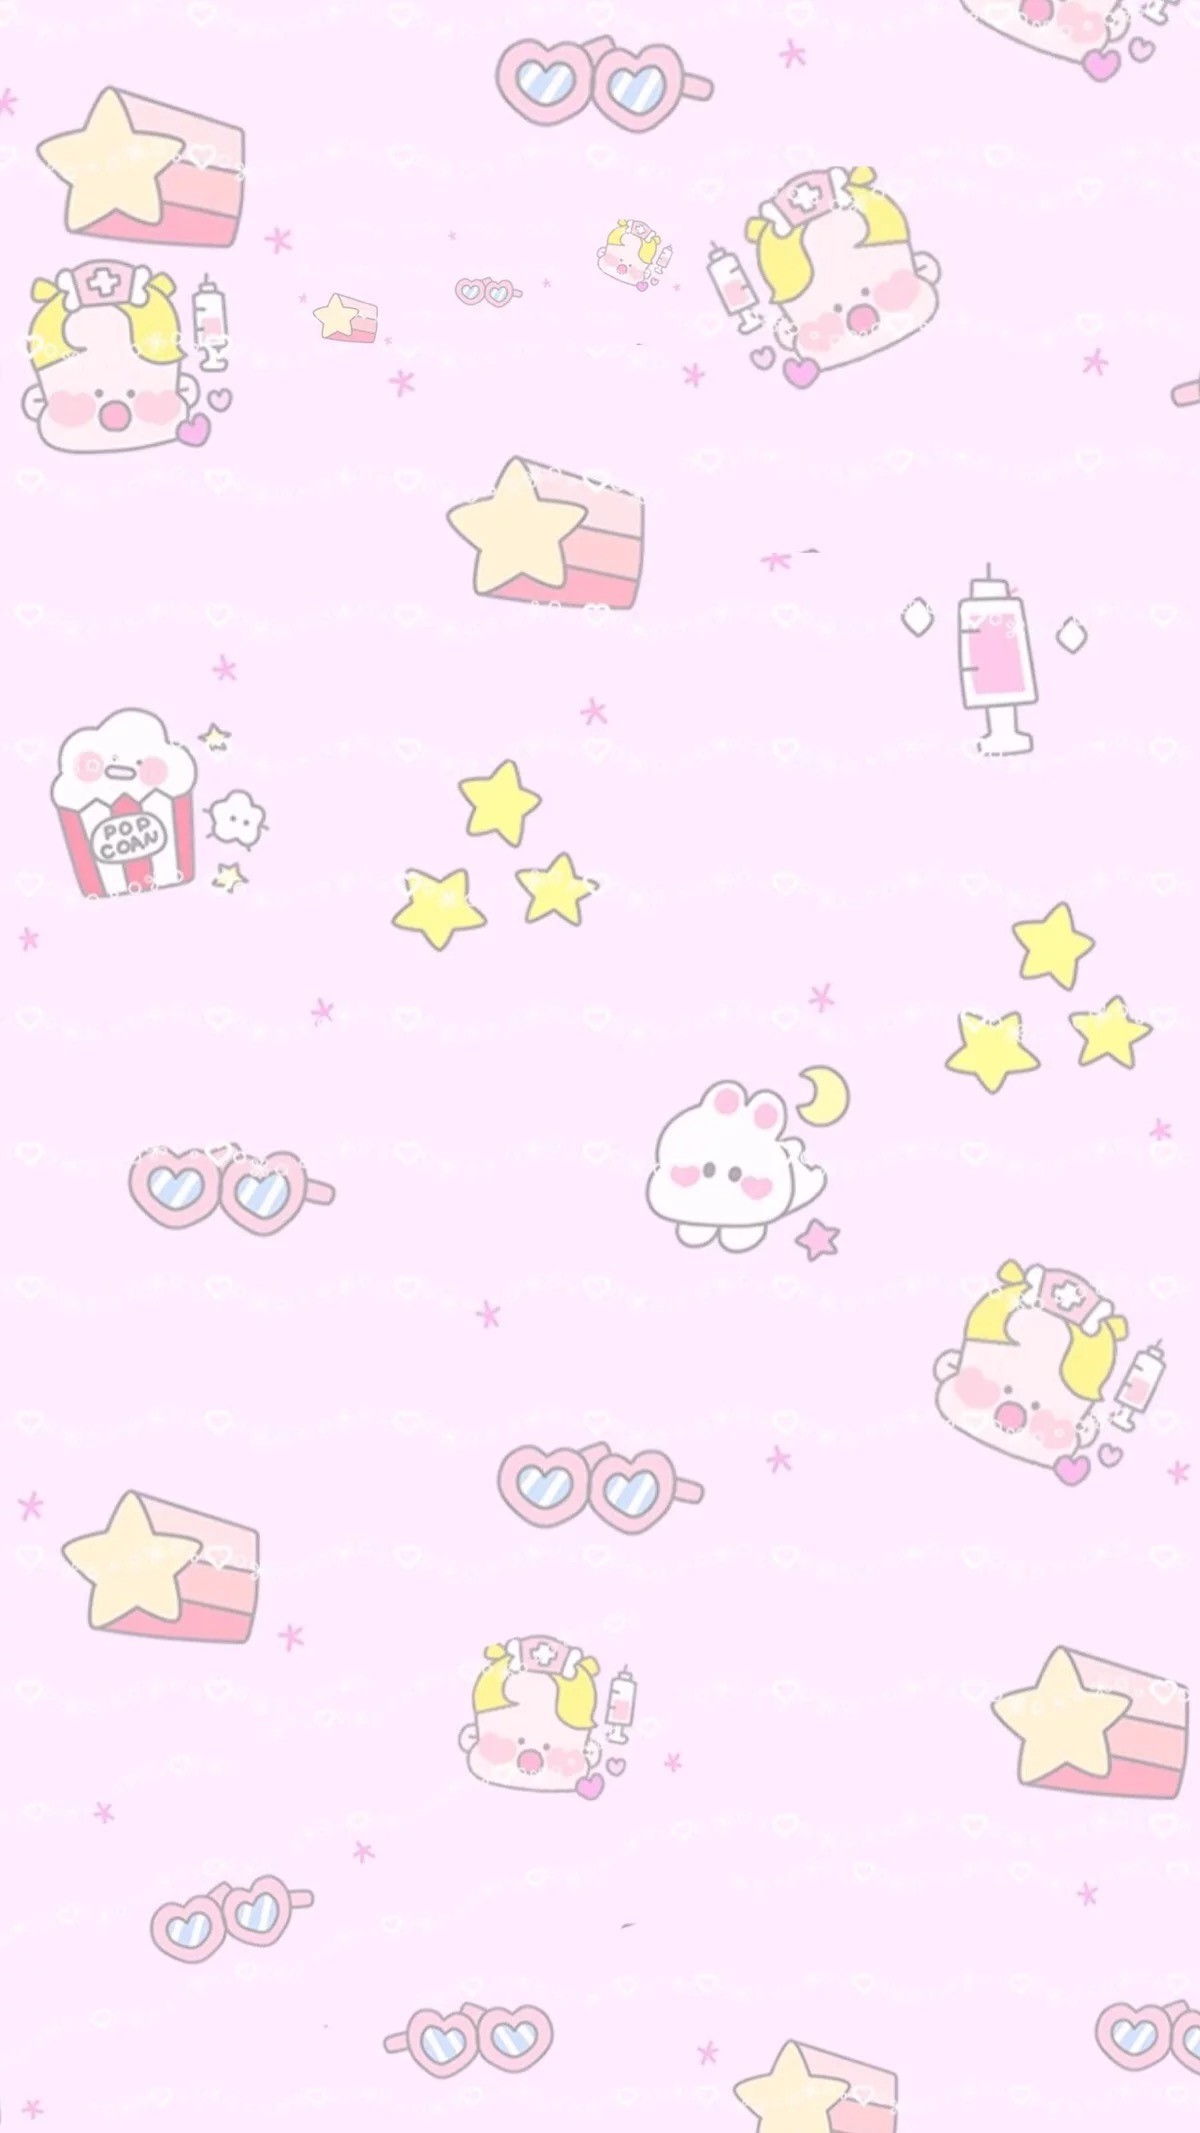 Cute Kawaii Wallpaper for iPhone (82+ images)